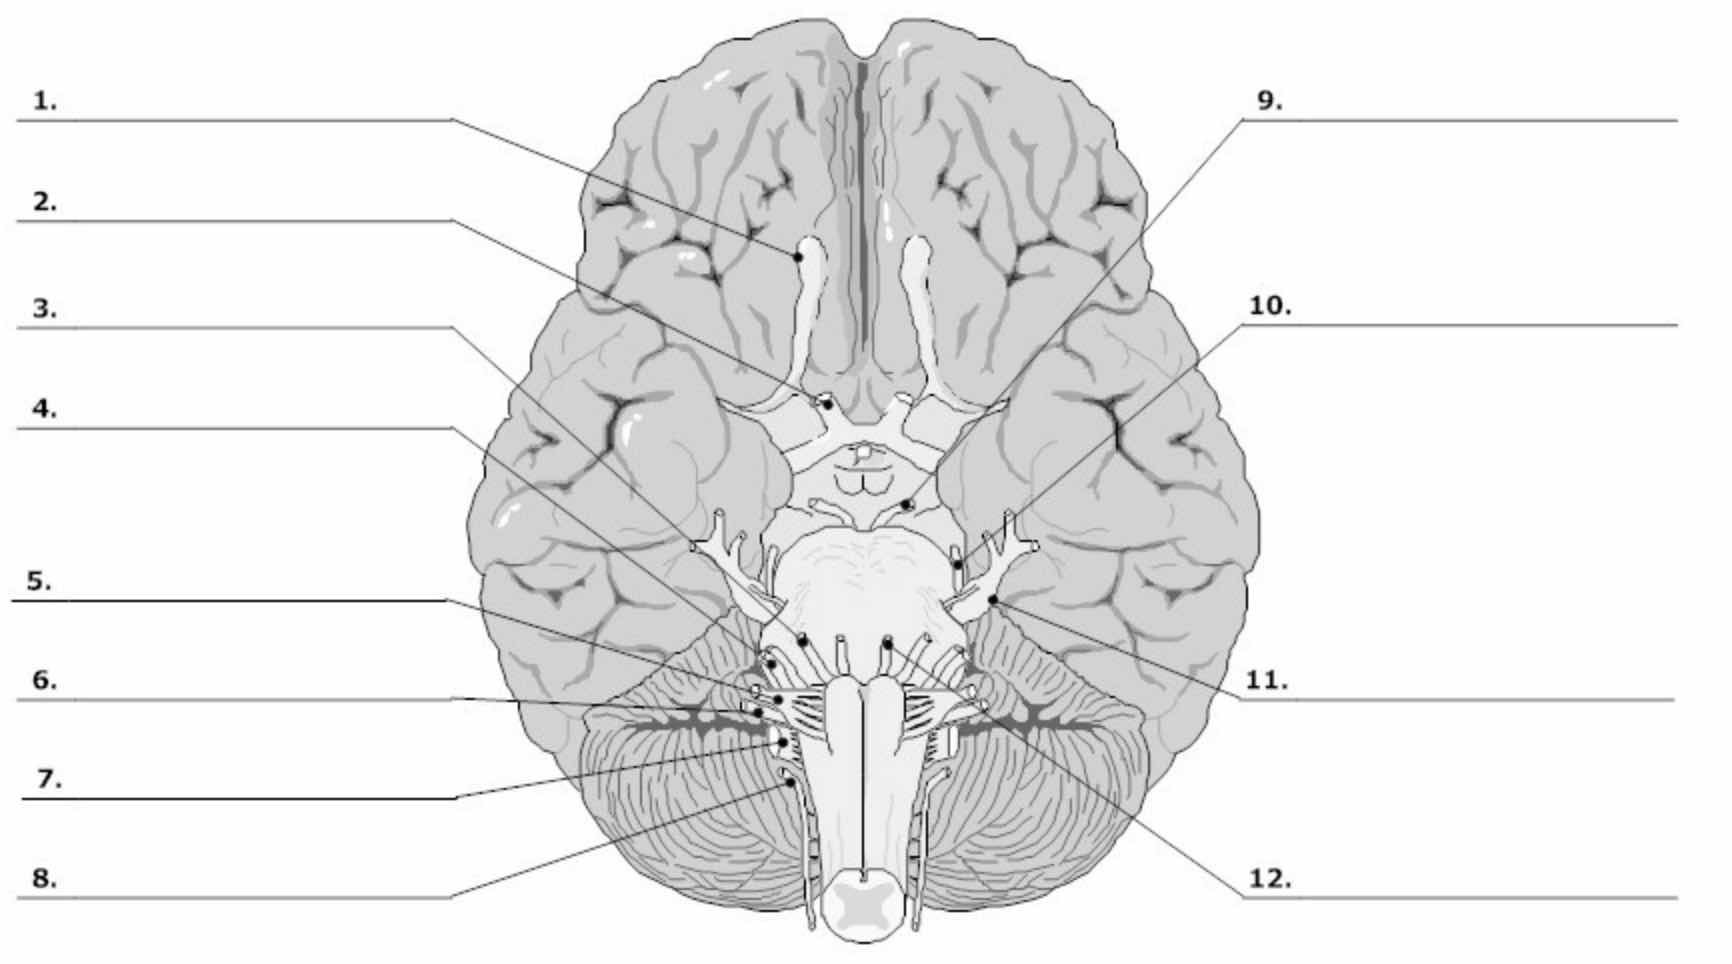 Blank Brain Diagram To Label - Derslatnaback